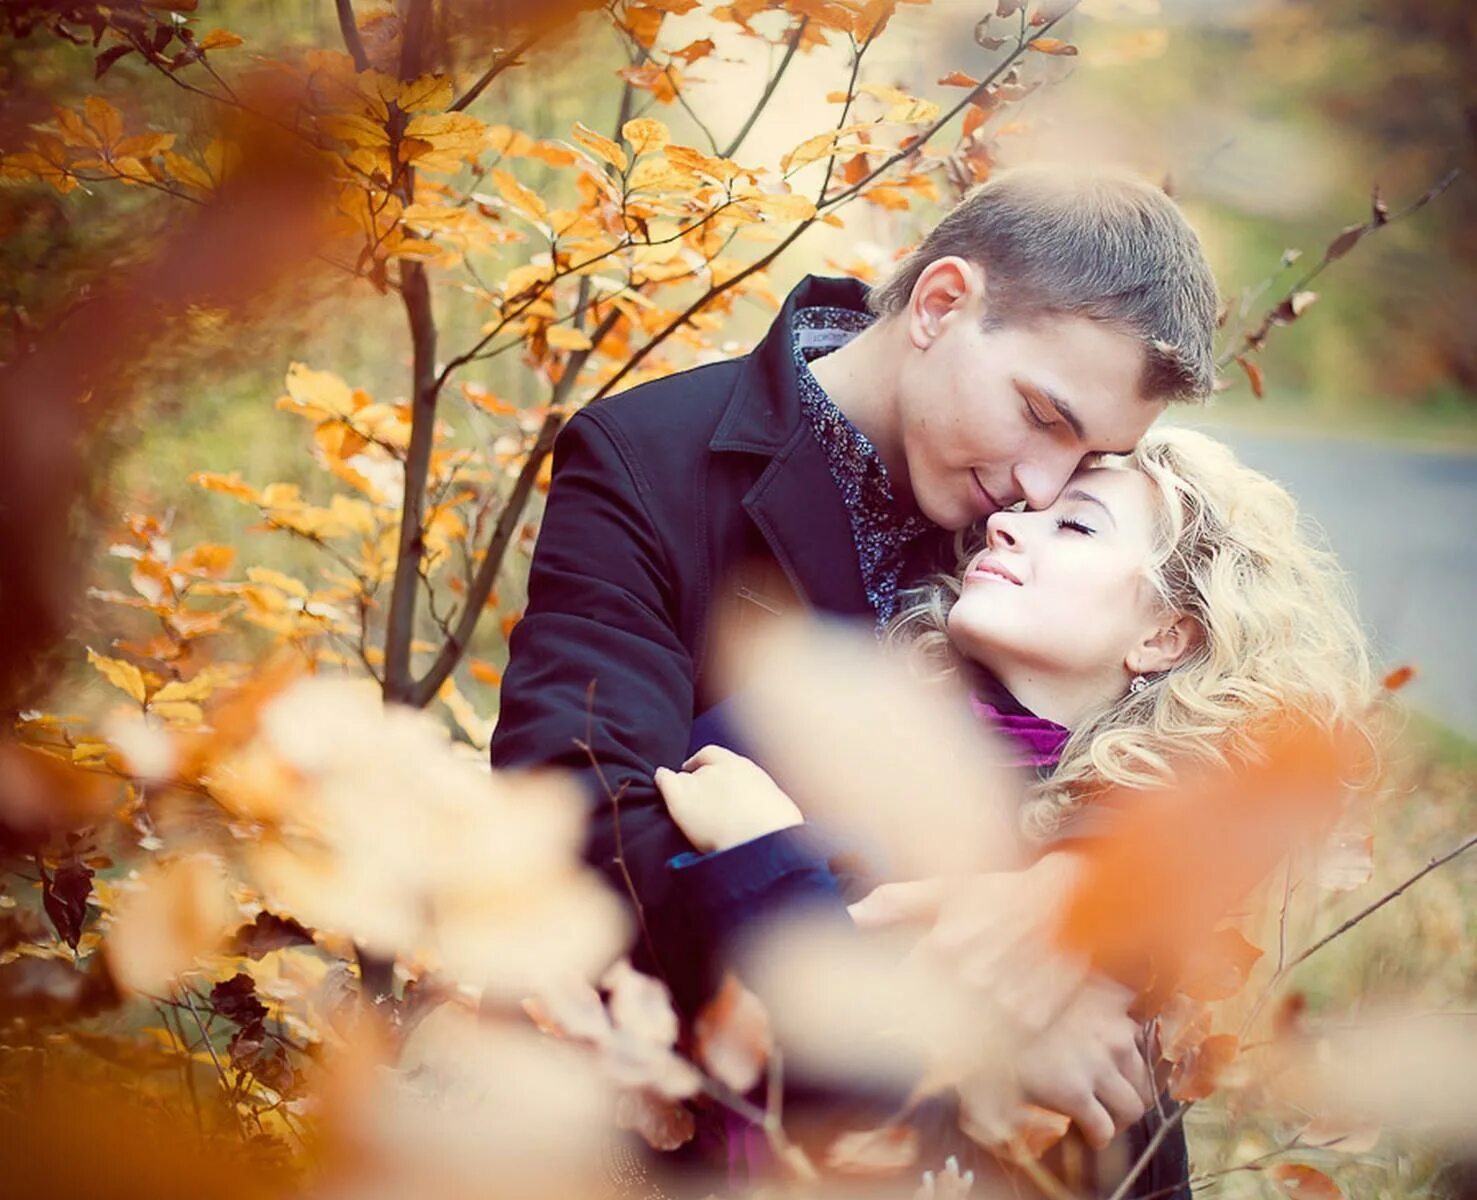 Песня тебя я в жизни повстречала судьбою. Осенняя любовь. Осенняя встреча. Осень любовь. Осенняя нежность.